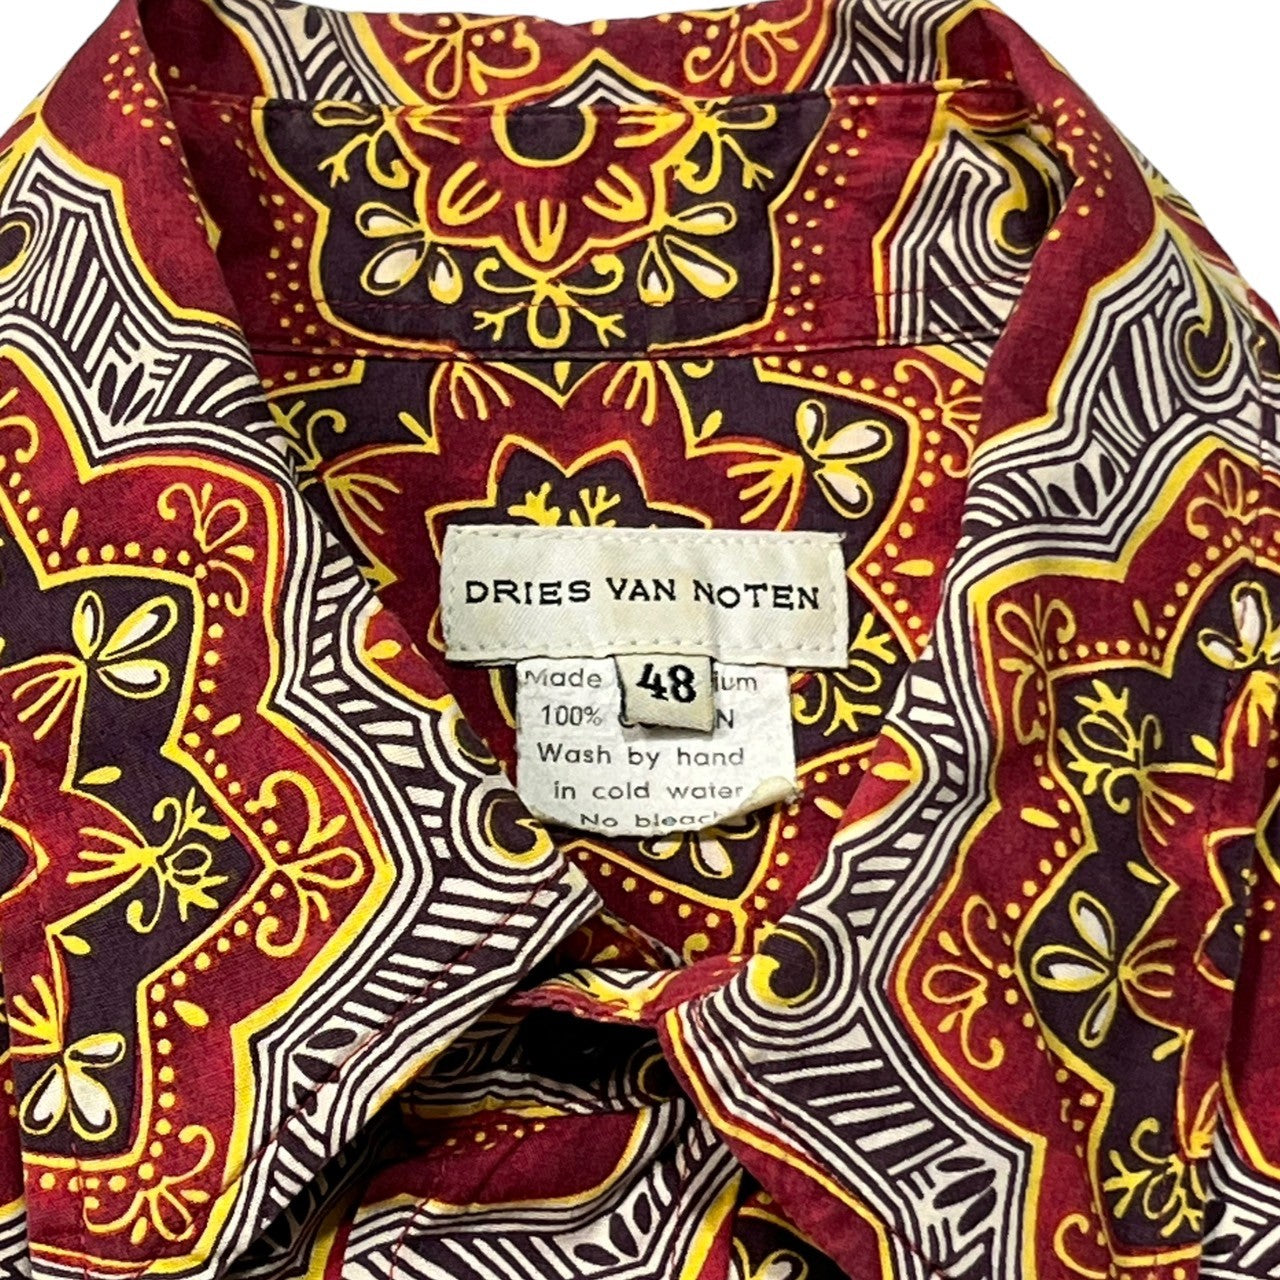 DRIES VAN NOTEN(ドリスヴァンノッテン) oriental allover pattern long sleeve cotton shirt オリエンタル 総柄 長袖 コットンシャツ SIZE 48(M) レッド